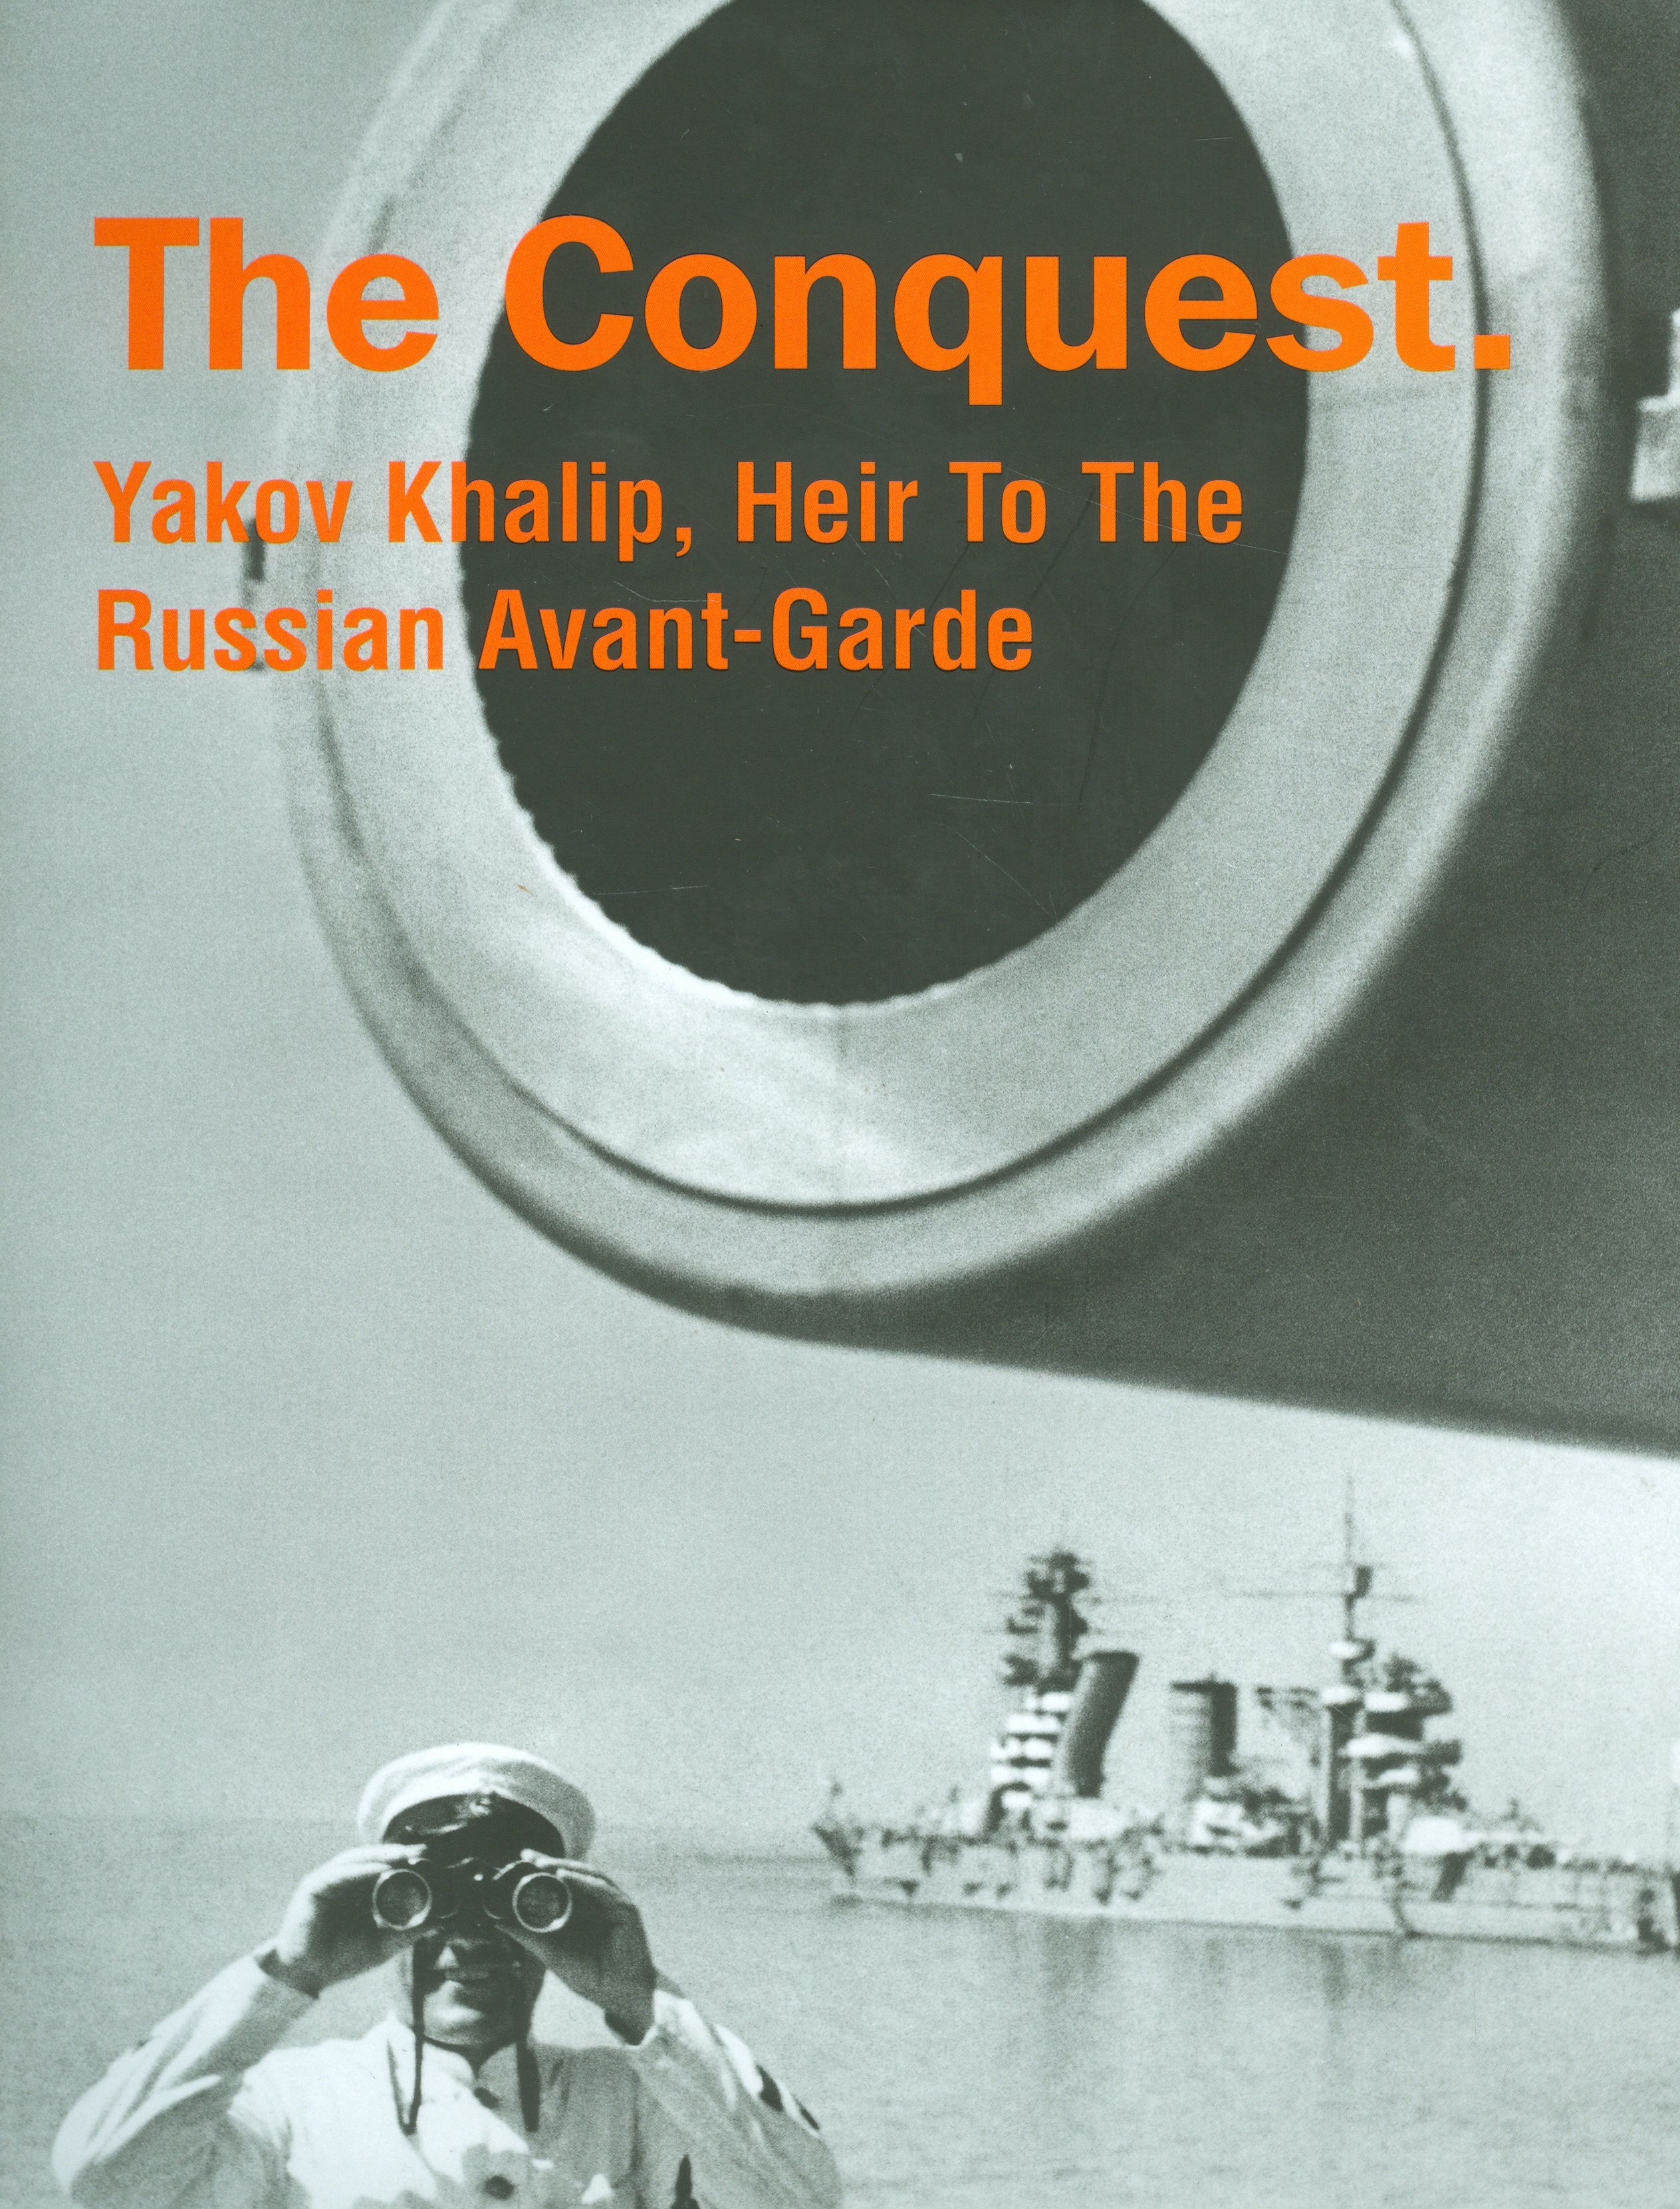 фотоальбом the conquest yakov khalip heir to the russian avant garde на англ яз Фотоальбом.The Conquest.Yakov Khalip,Heir To The Russian Avant-Garde (на англ.яз.)